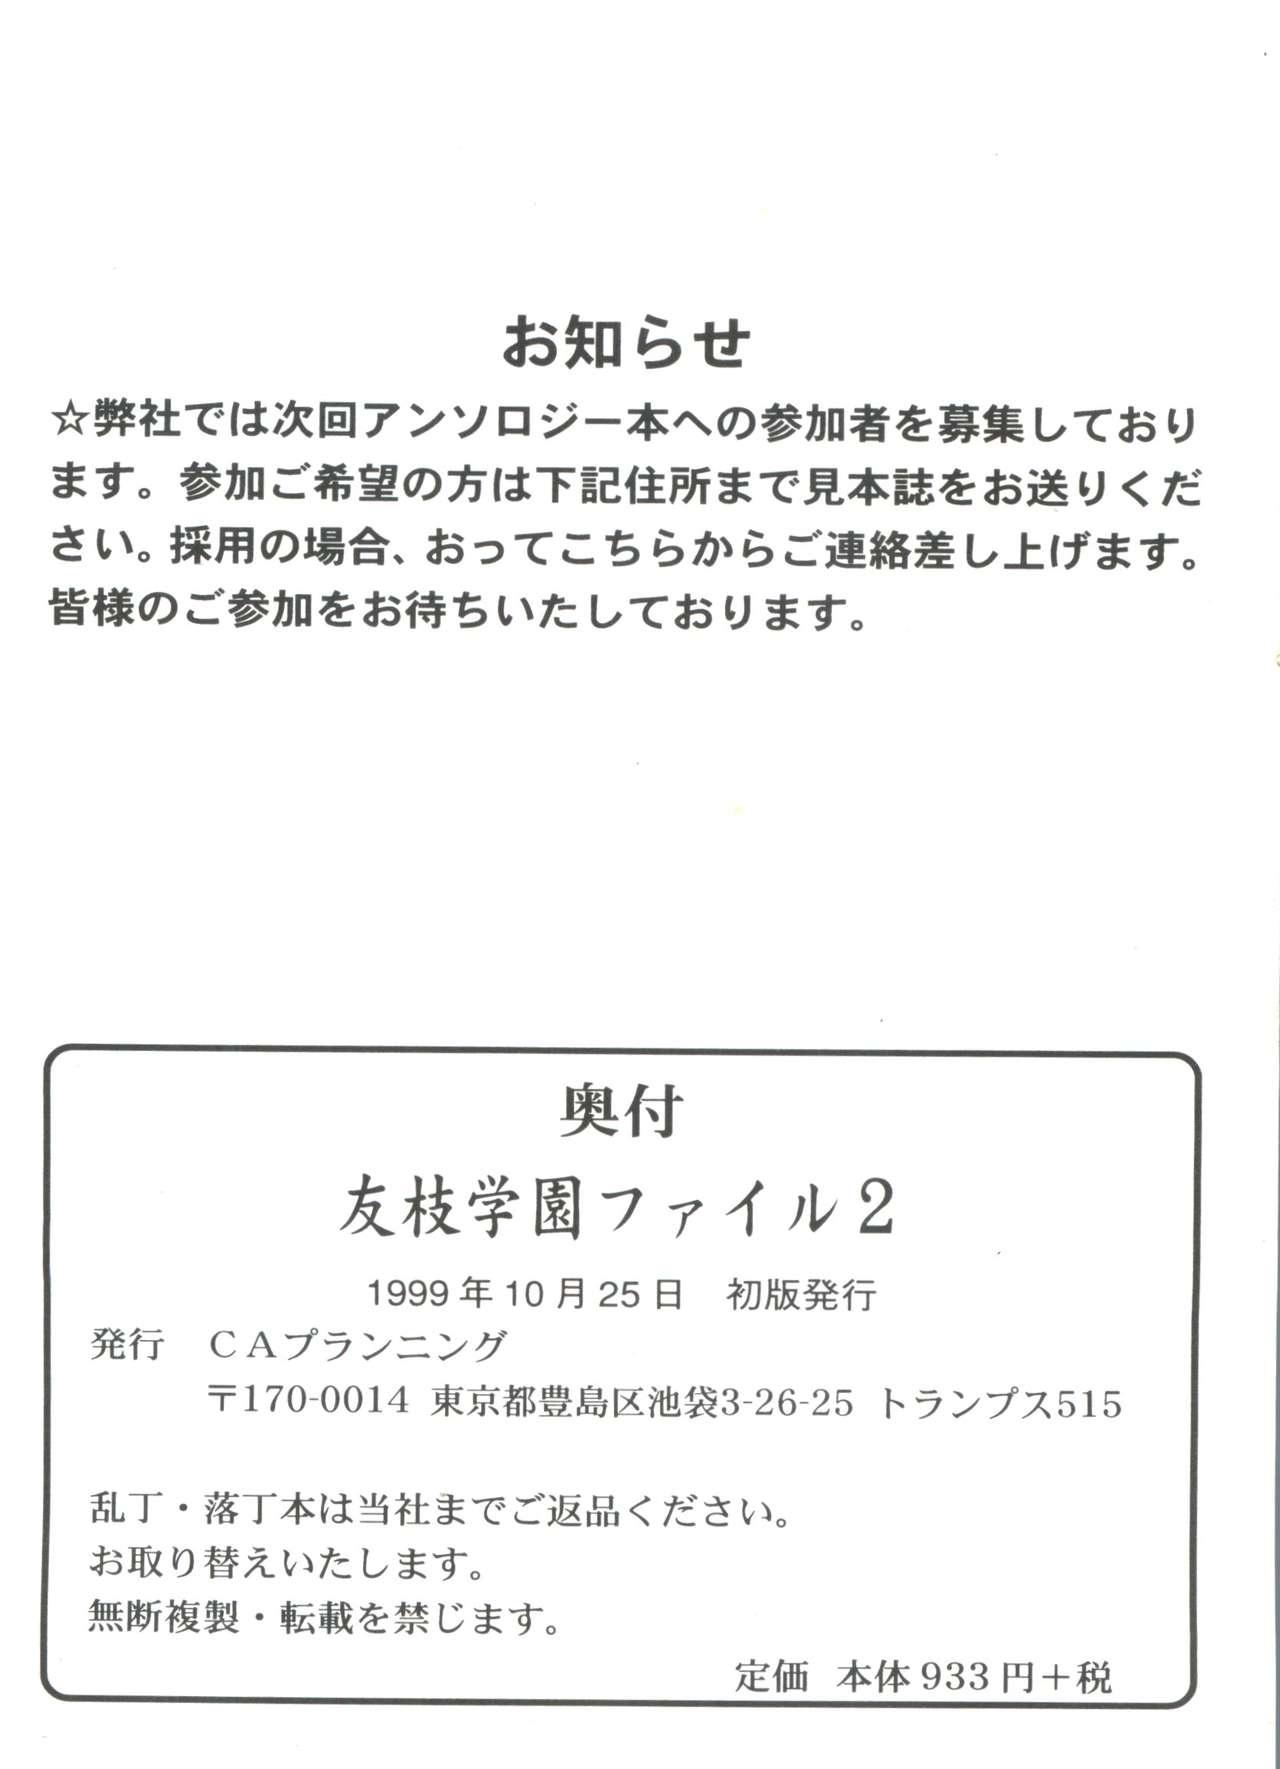 Tomoeda Gakuen File 2 165